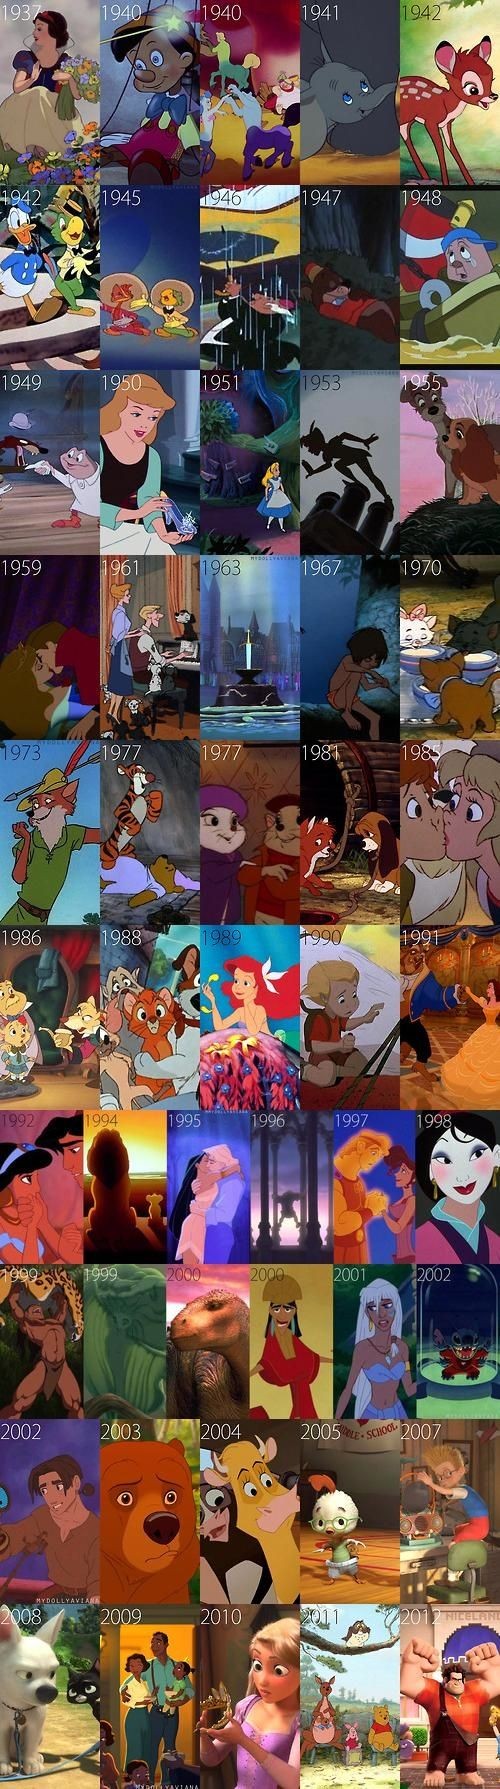 Disney Animated Movies, 1937-2012 One day I will w...